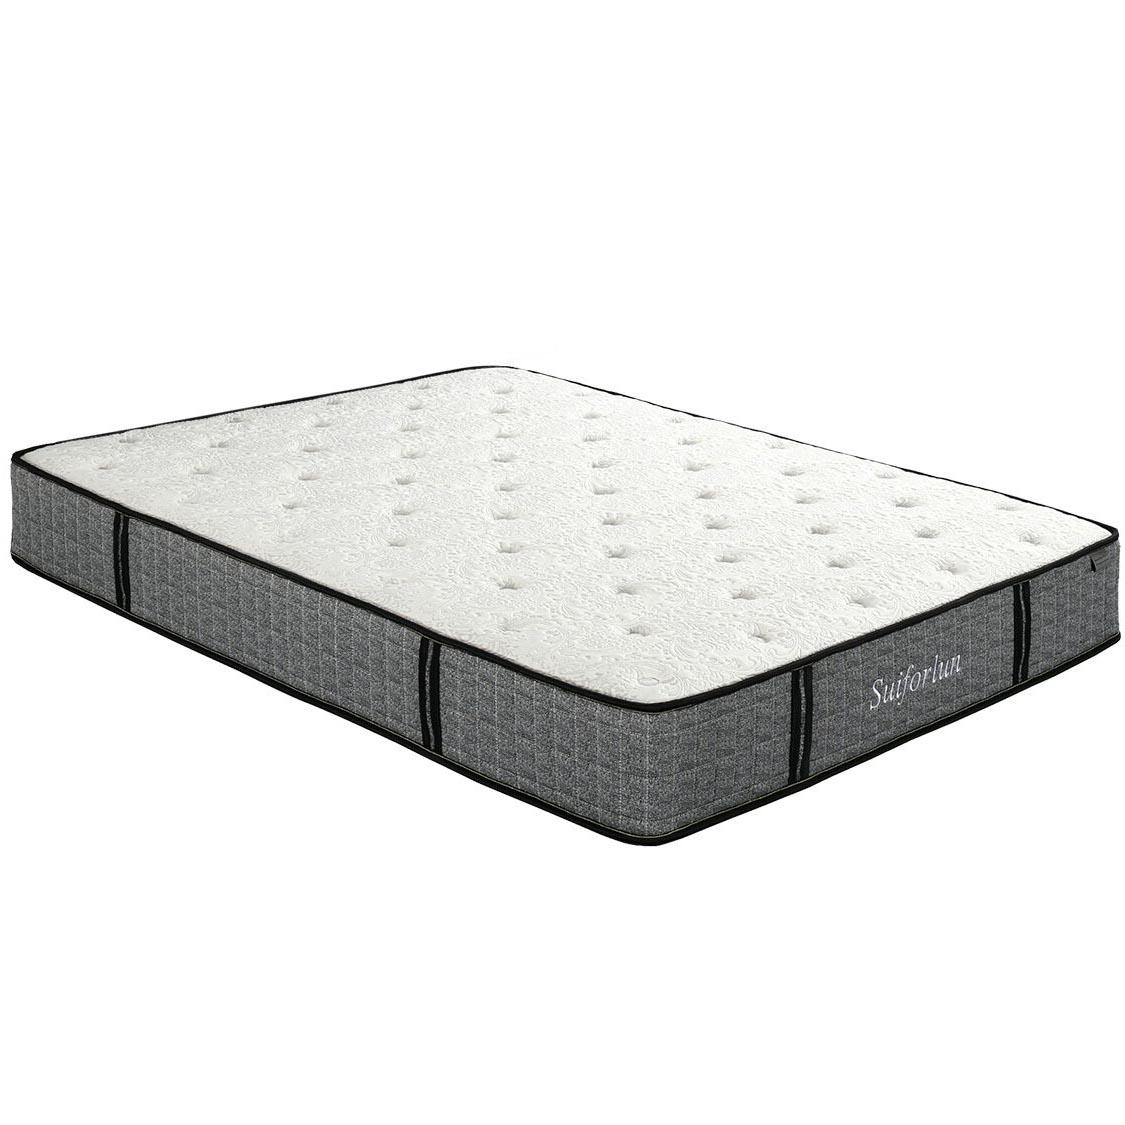 Suiforlun mattress pocket spring hybrid mattress king series for home-2